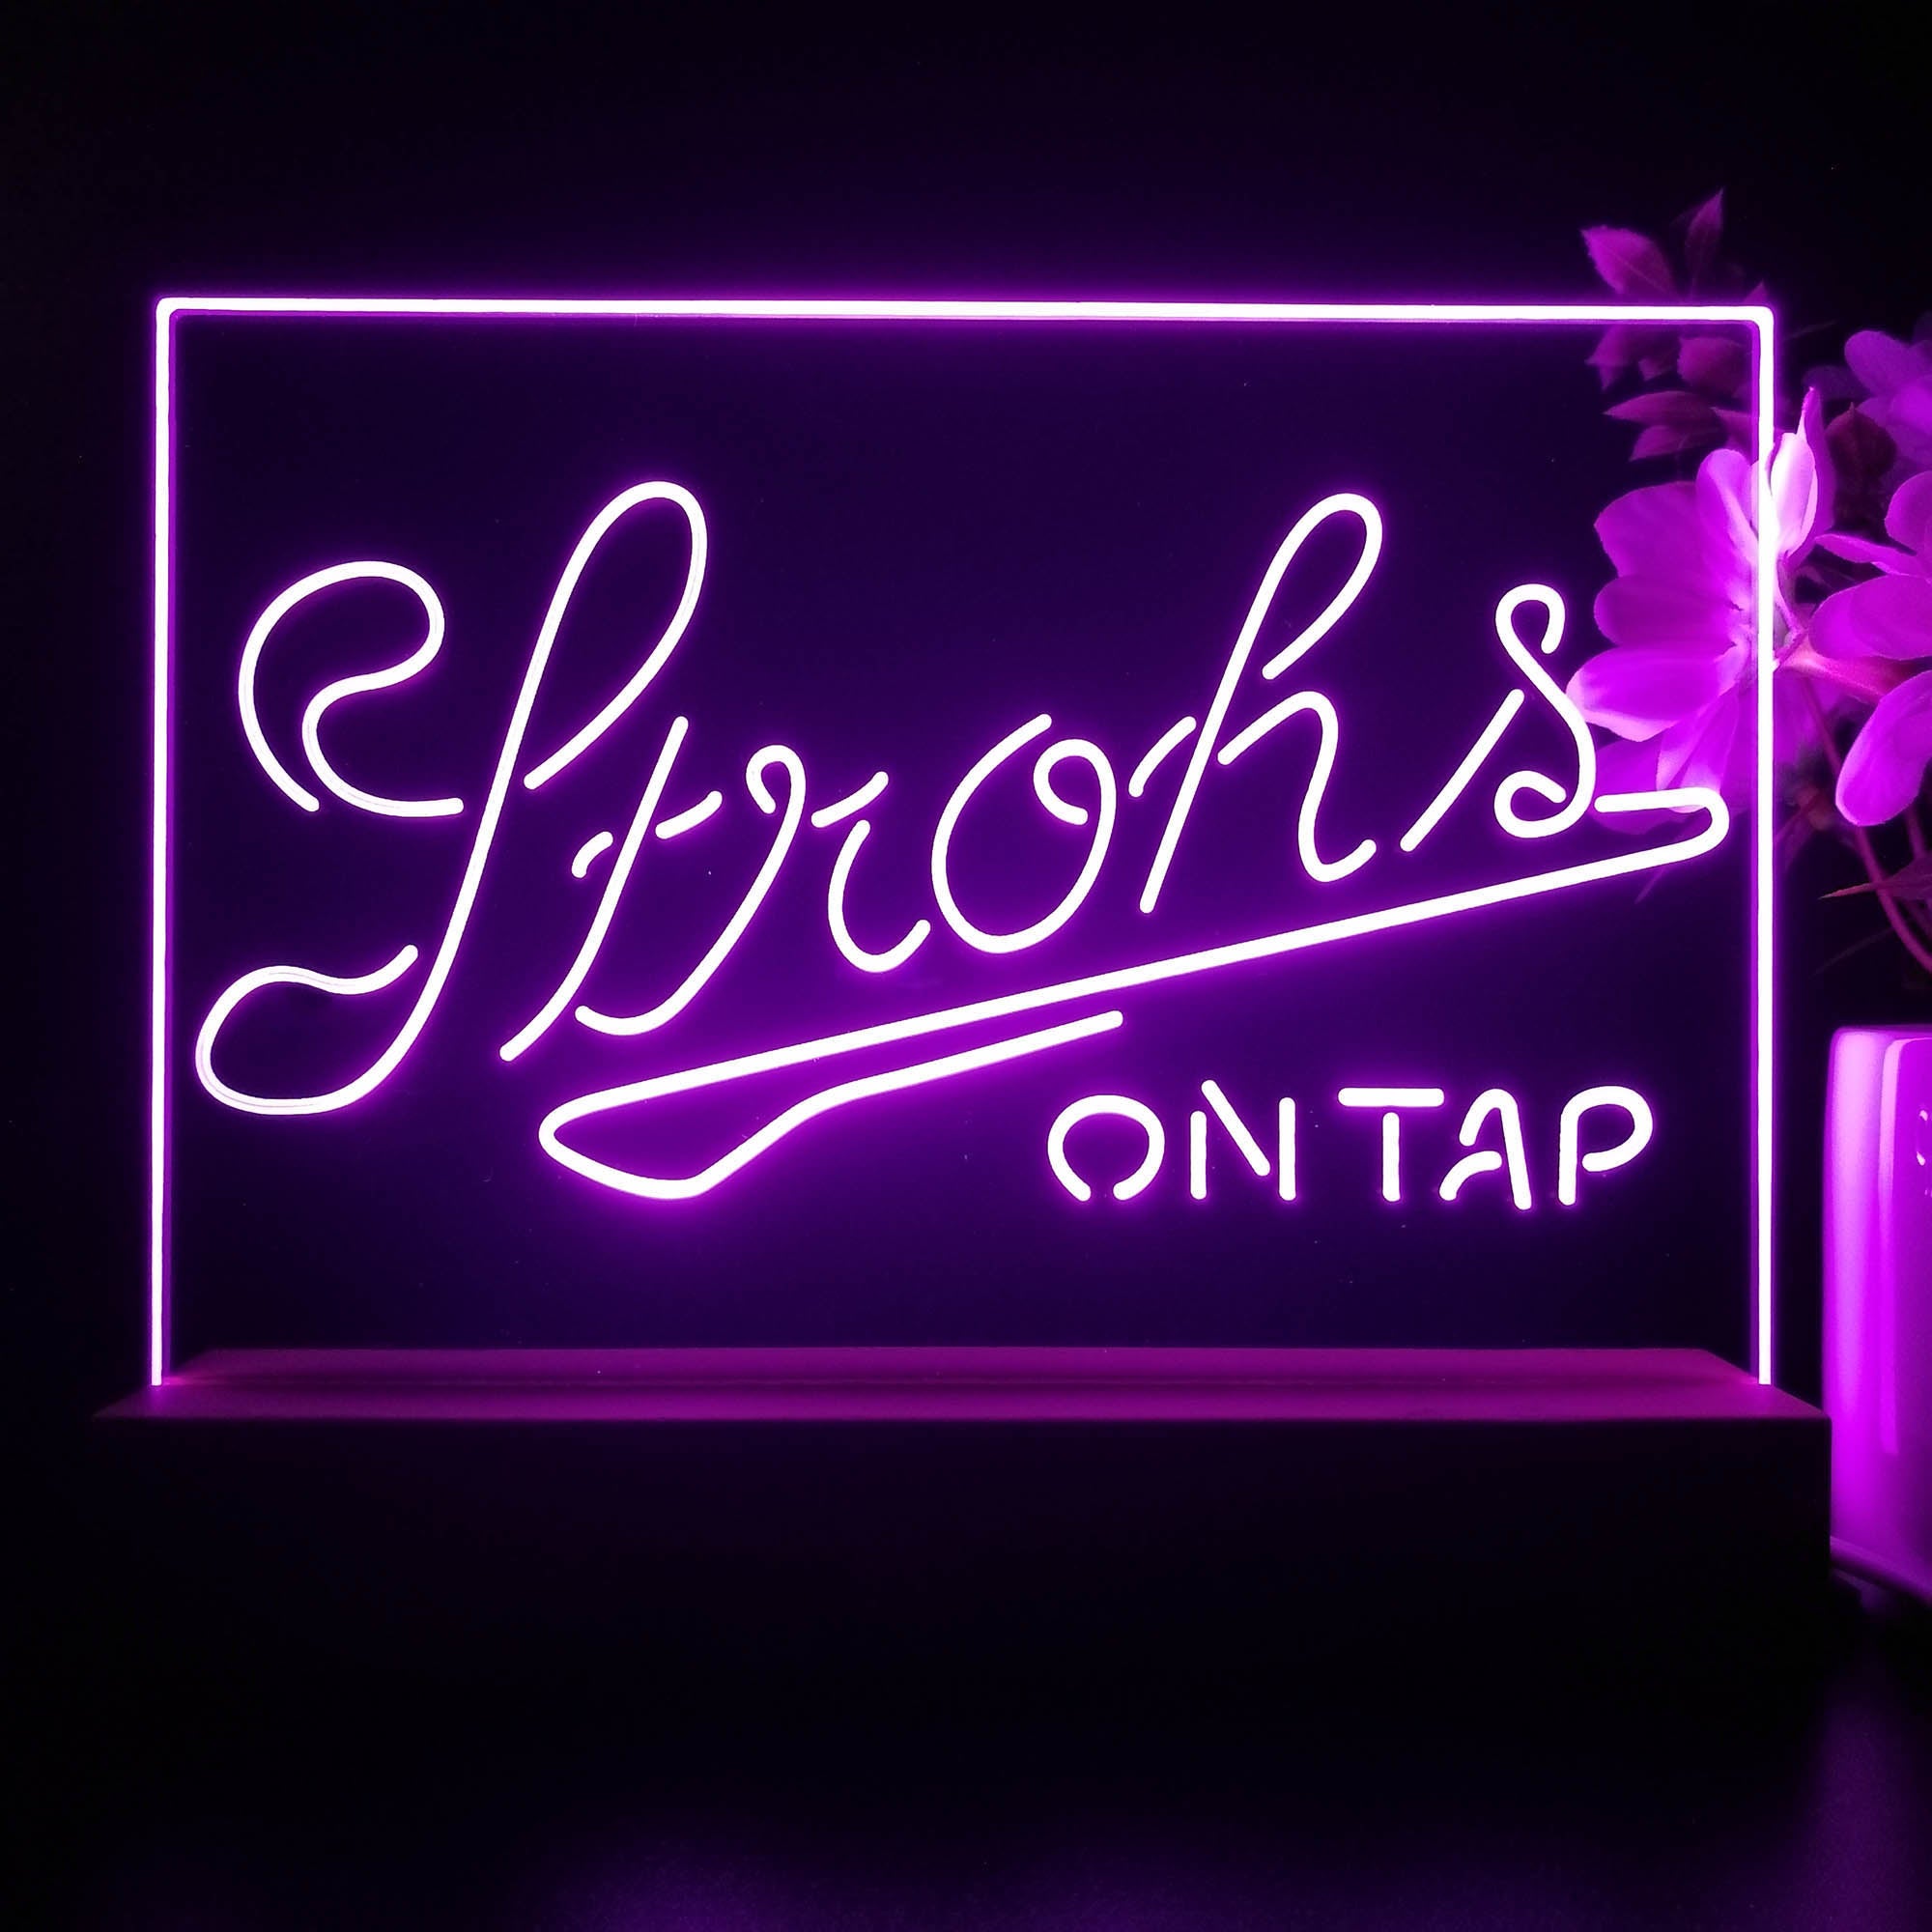 Strohs On Tap Beer Bar Neon Sign Pub Bar Lamp